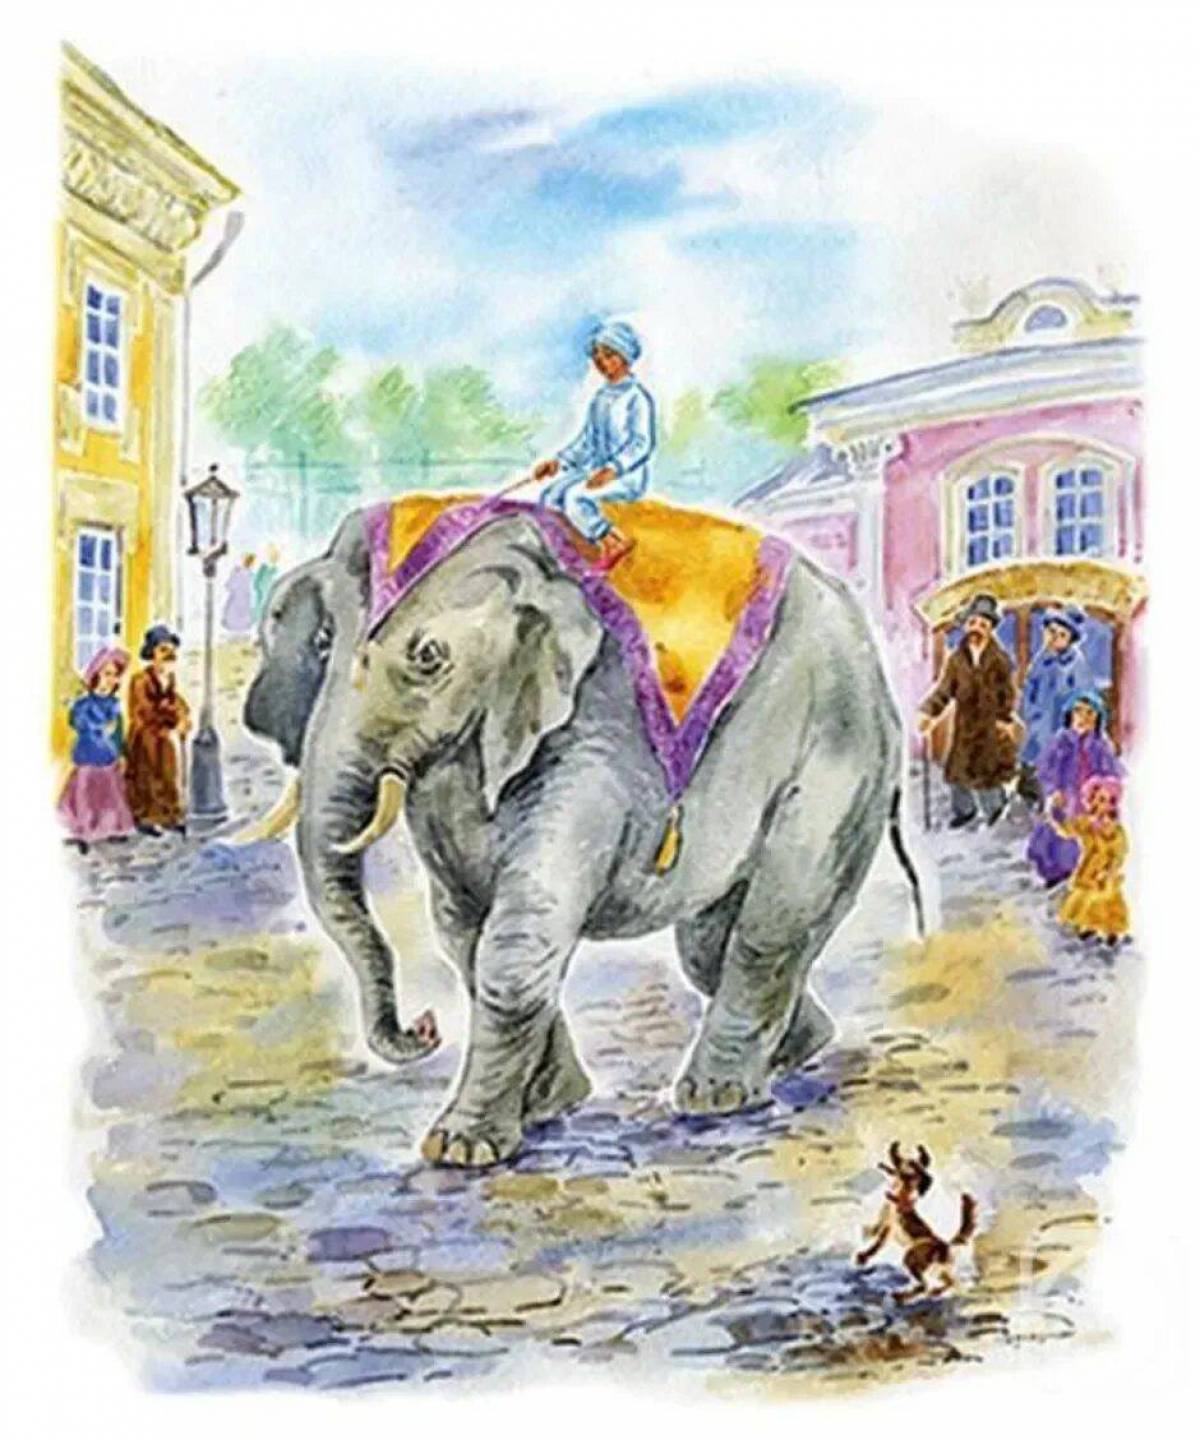 Слон и моська автор. Слон и моська. Басни. Басня Крылова слон и моська. Басня слон и моська Крылов.